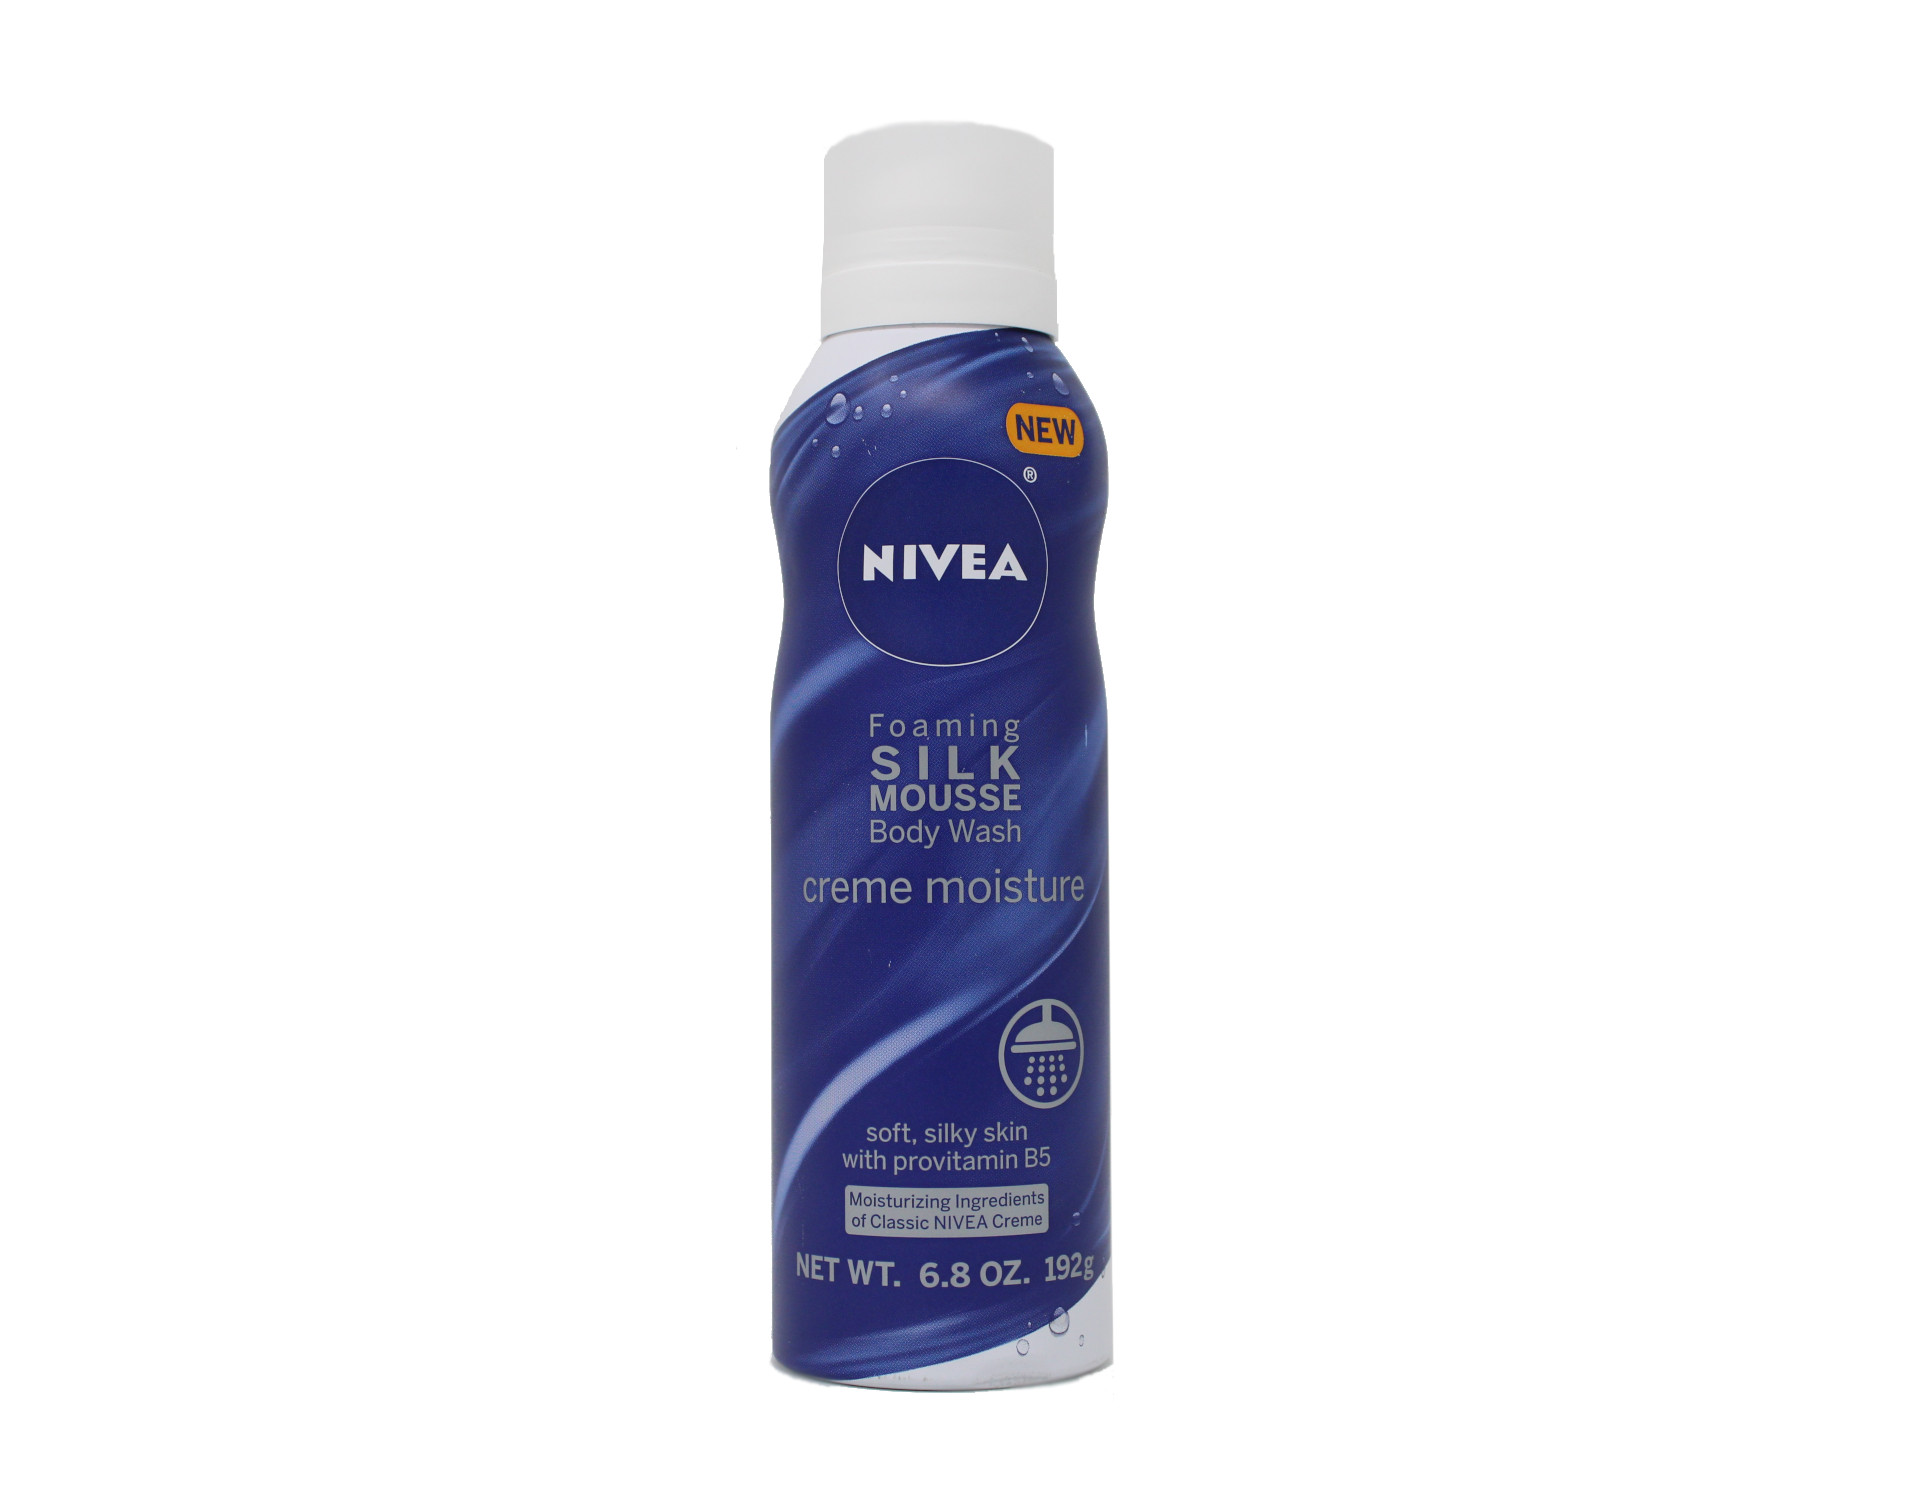 NIVEA Creme Moisture Foaming Silk Mousse Body Wash, 6.8 Ounce - image 1 of 2